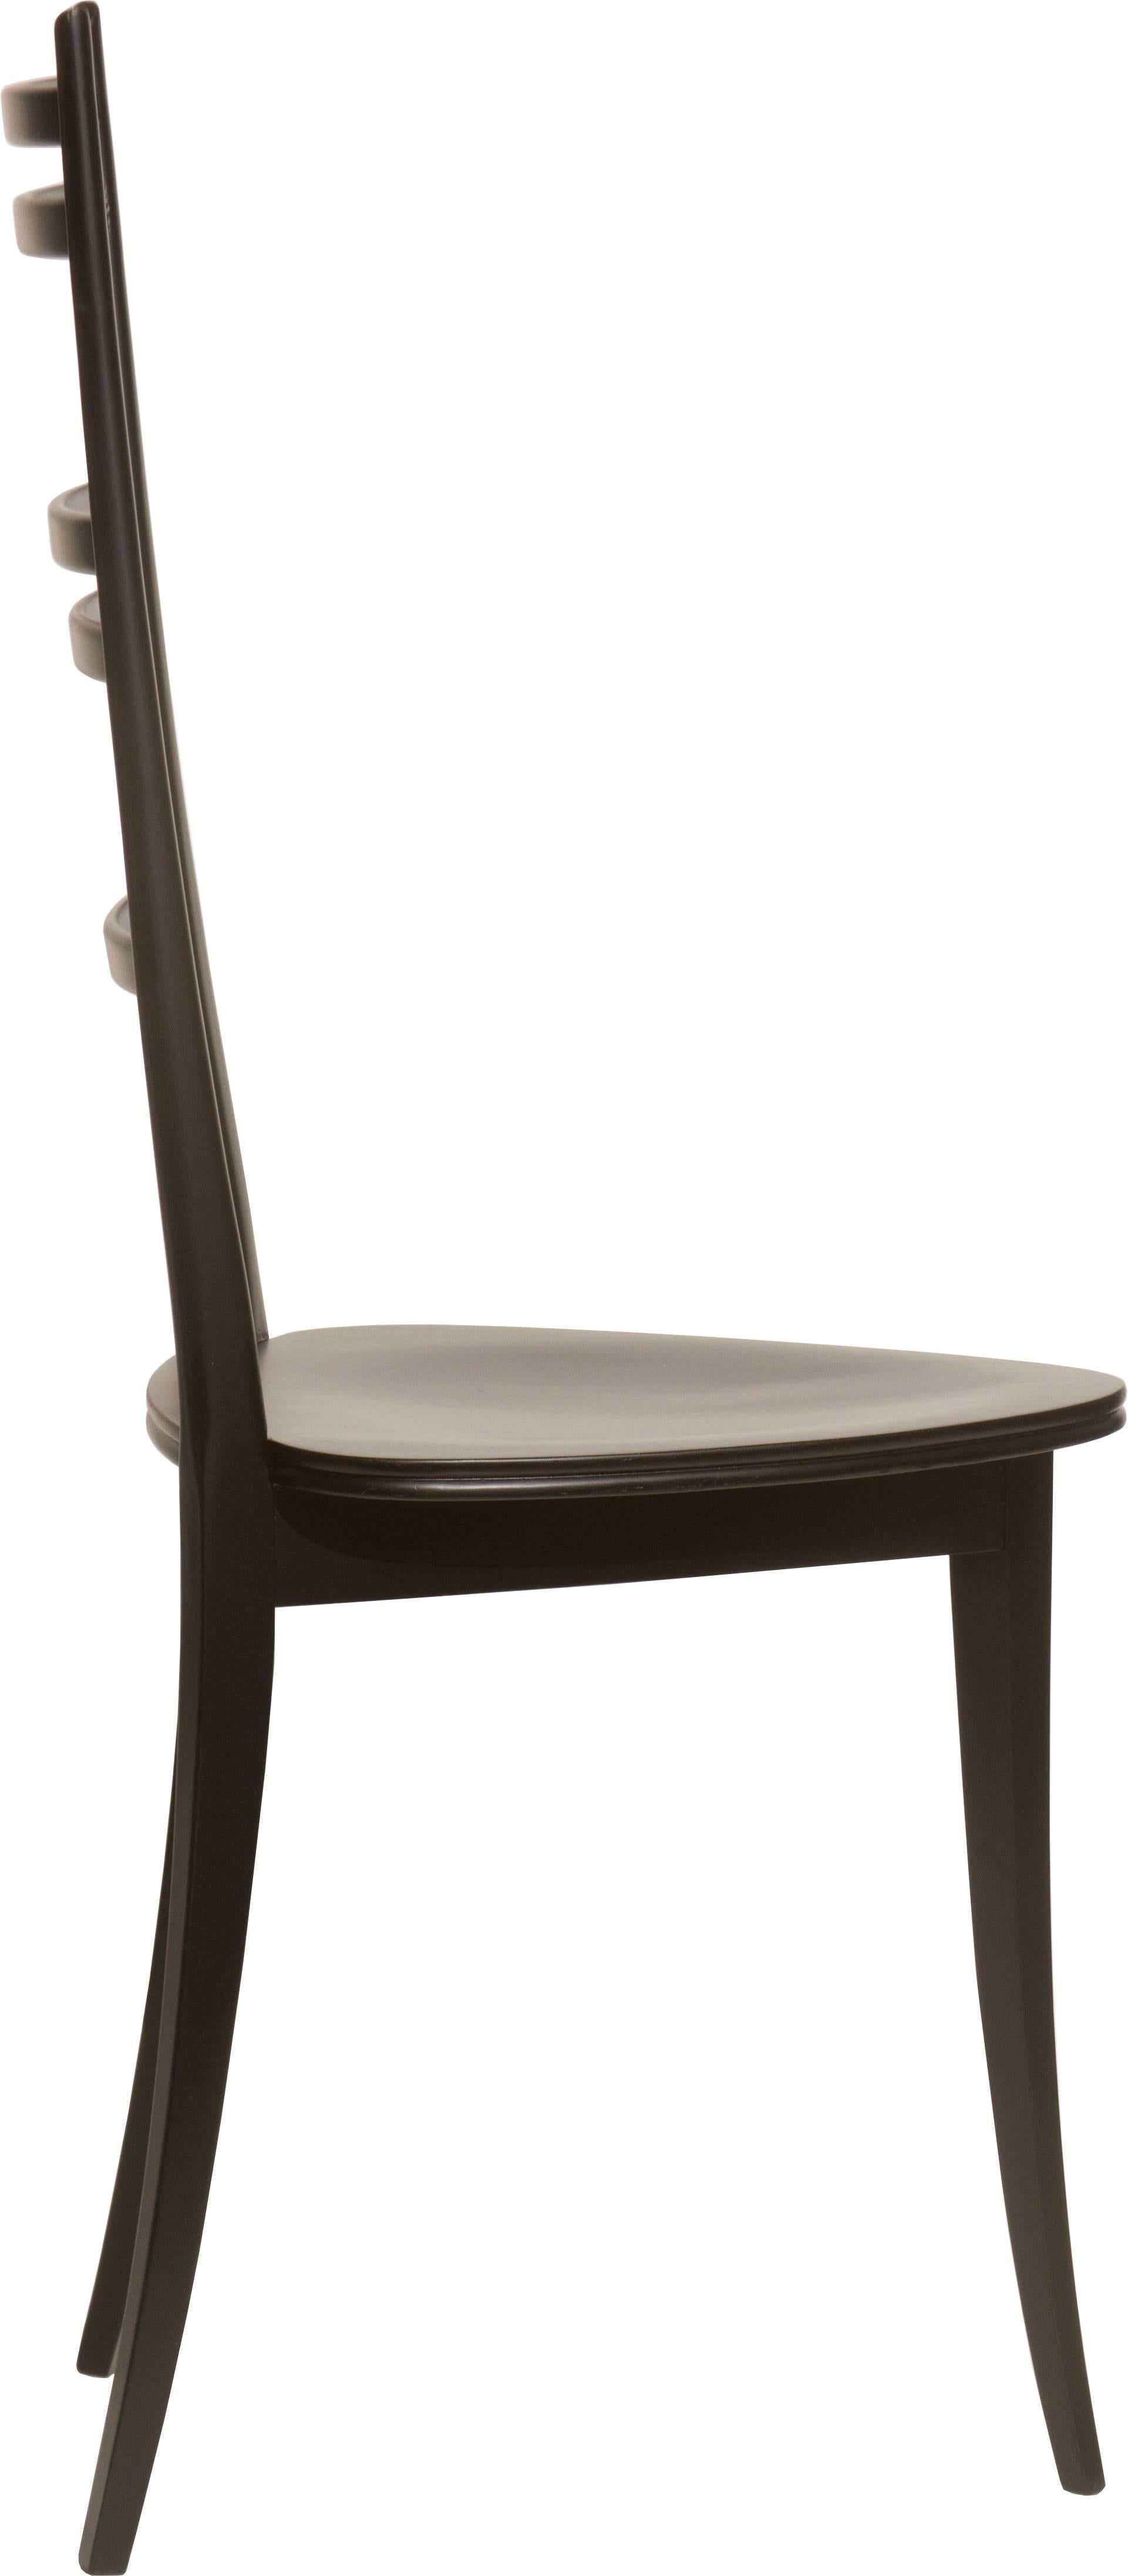 Mid-20th Century Italian Three Legged Chair For Sale